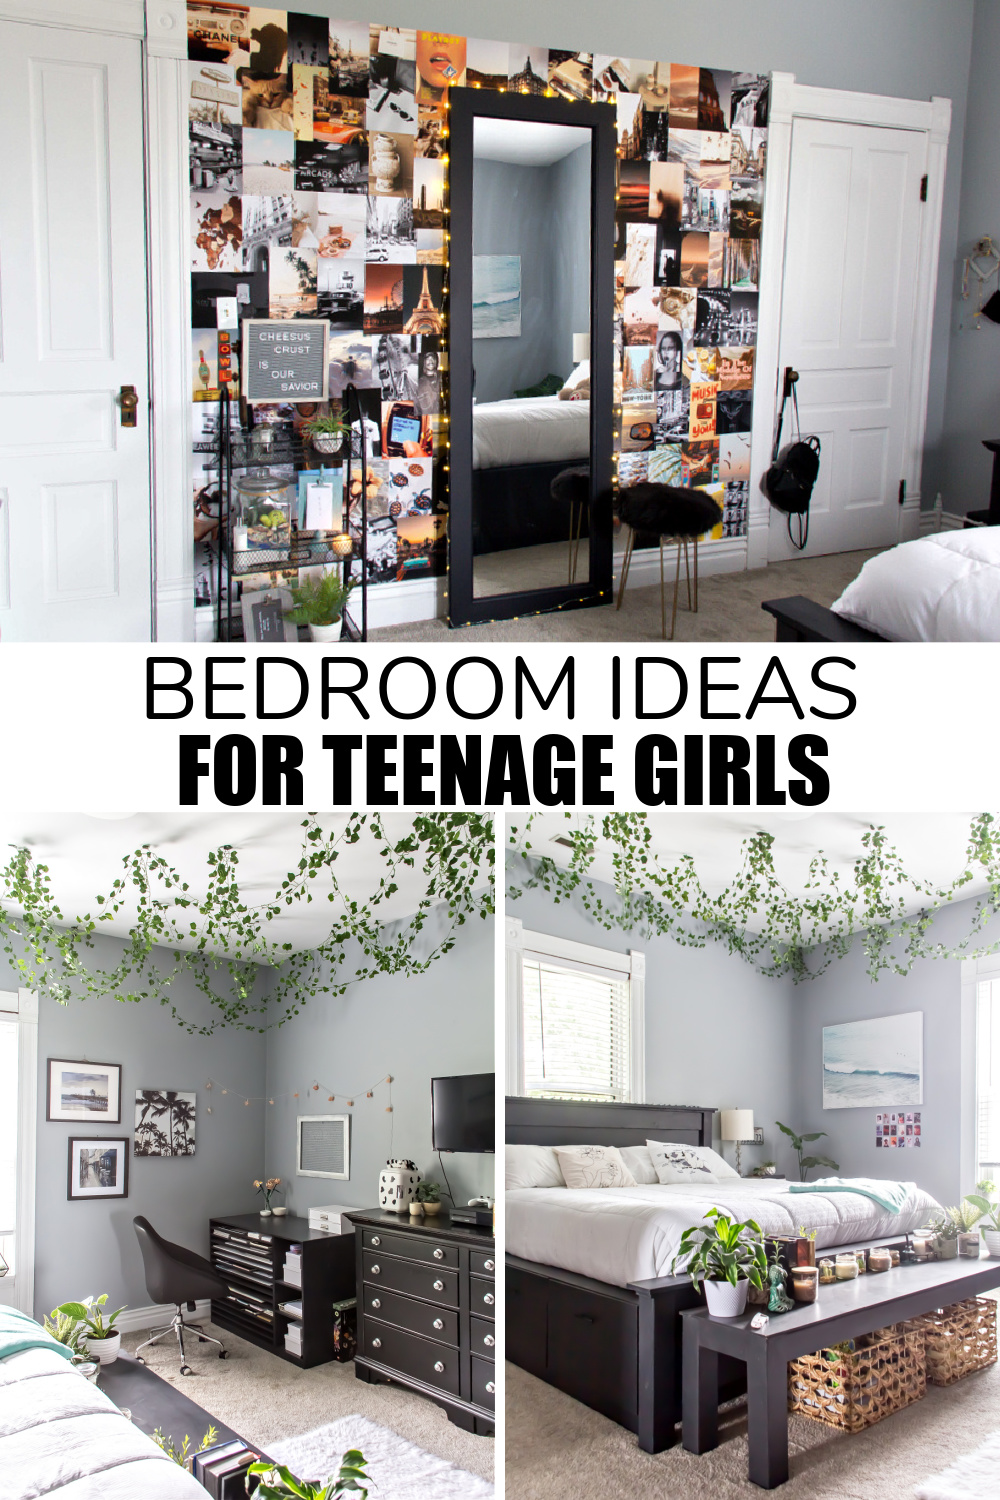 Bedroom ideas for teenage girls Pinterest image